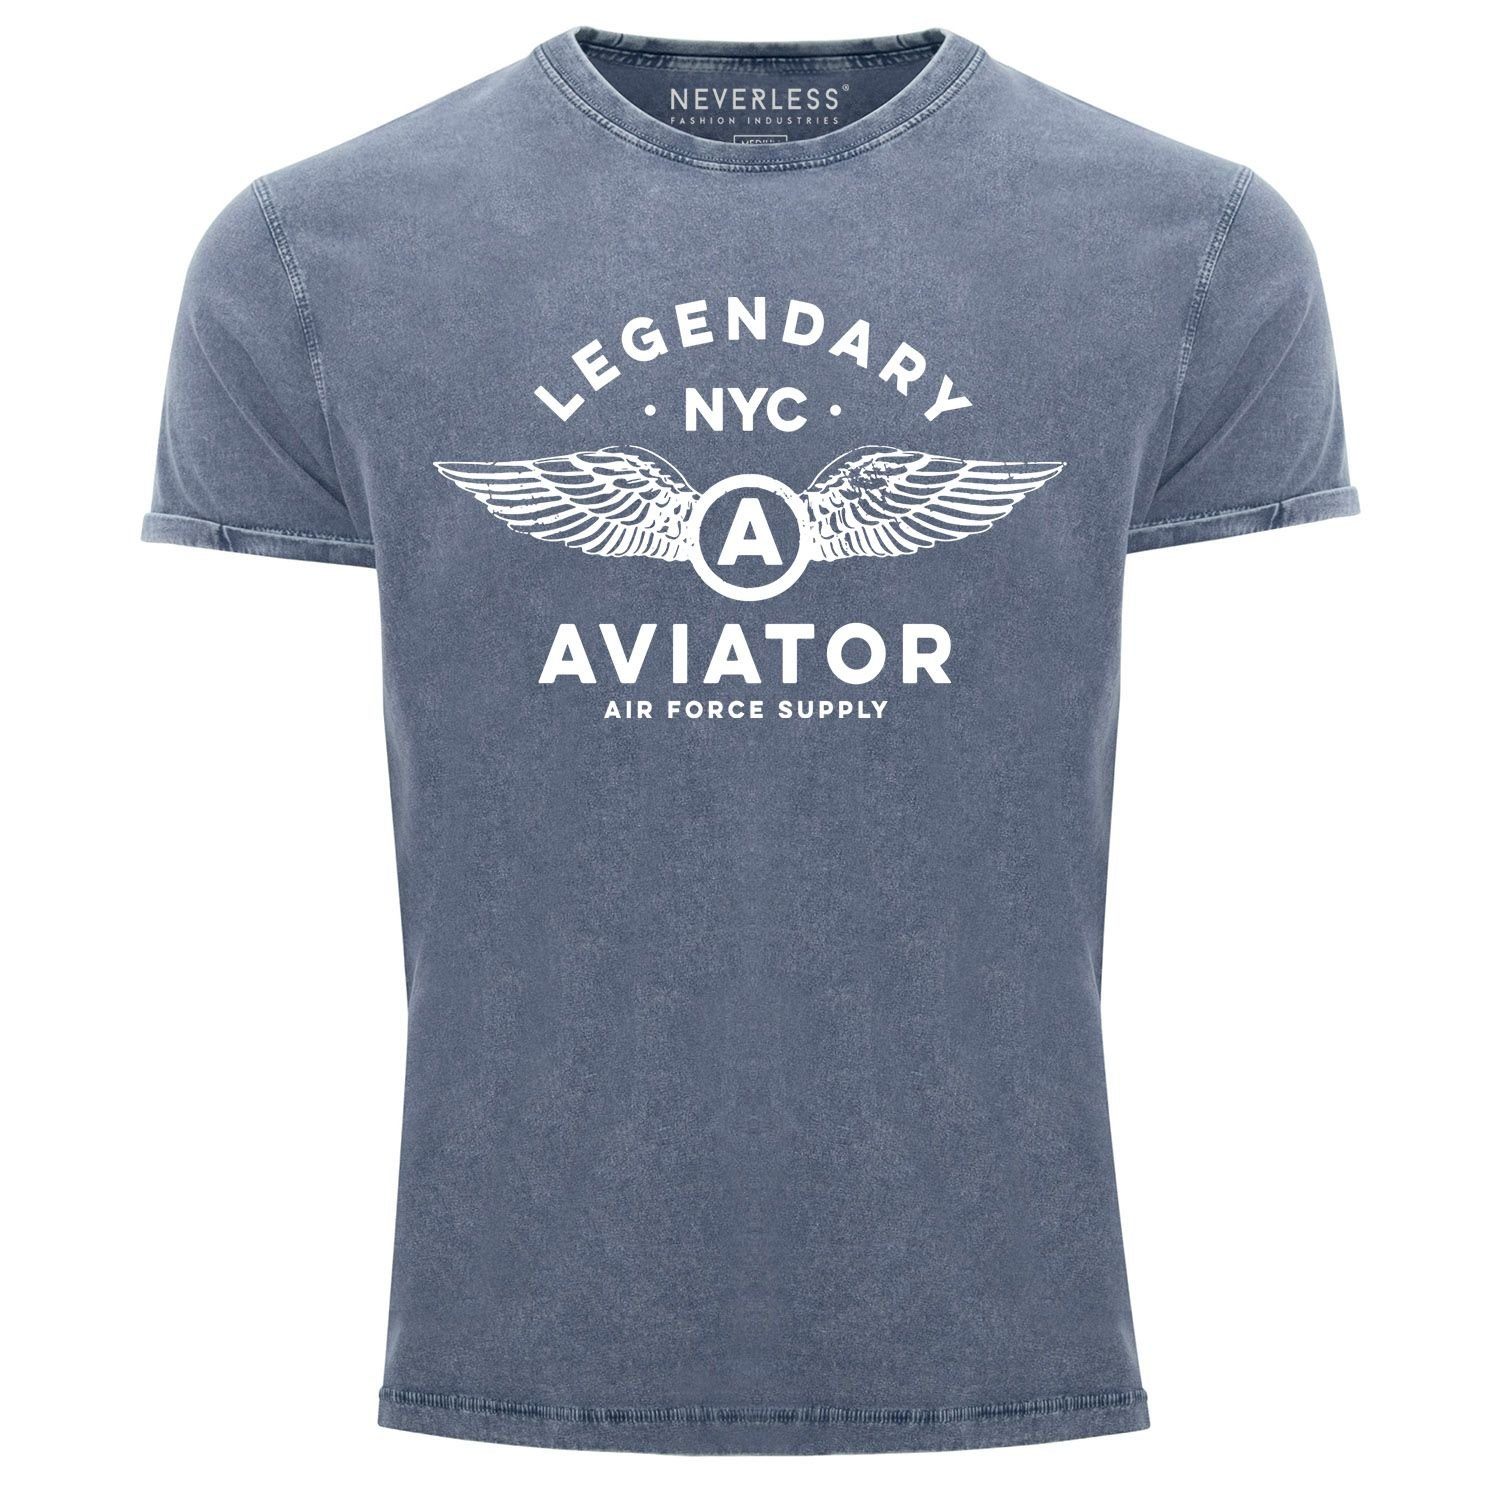 Neverless Print-Shirt Herren Vintage Shirt Legendary NYC Aviator Air Force Luftwaffe Flügel Printshirt Used Look Slim Fit Neverless® mit Print blau